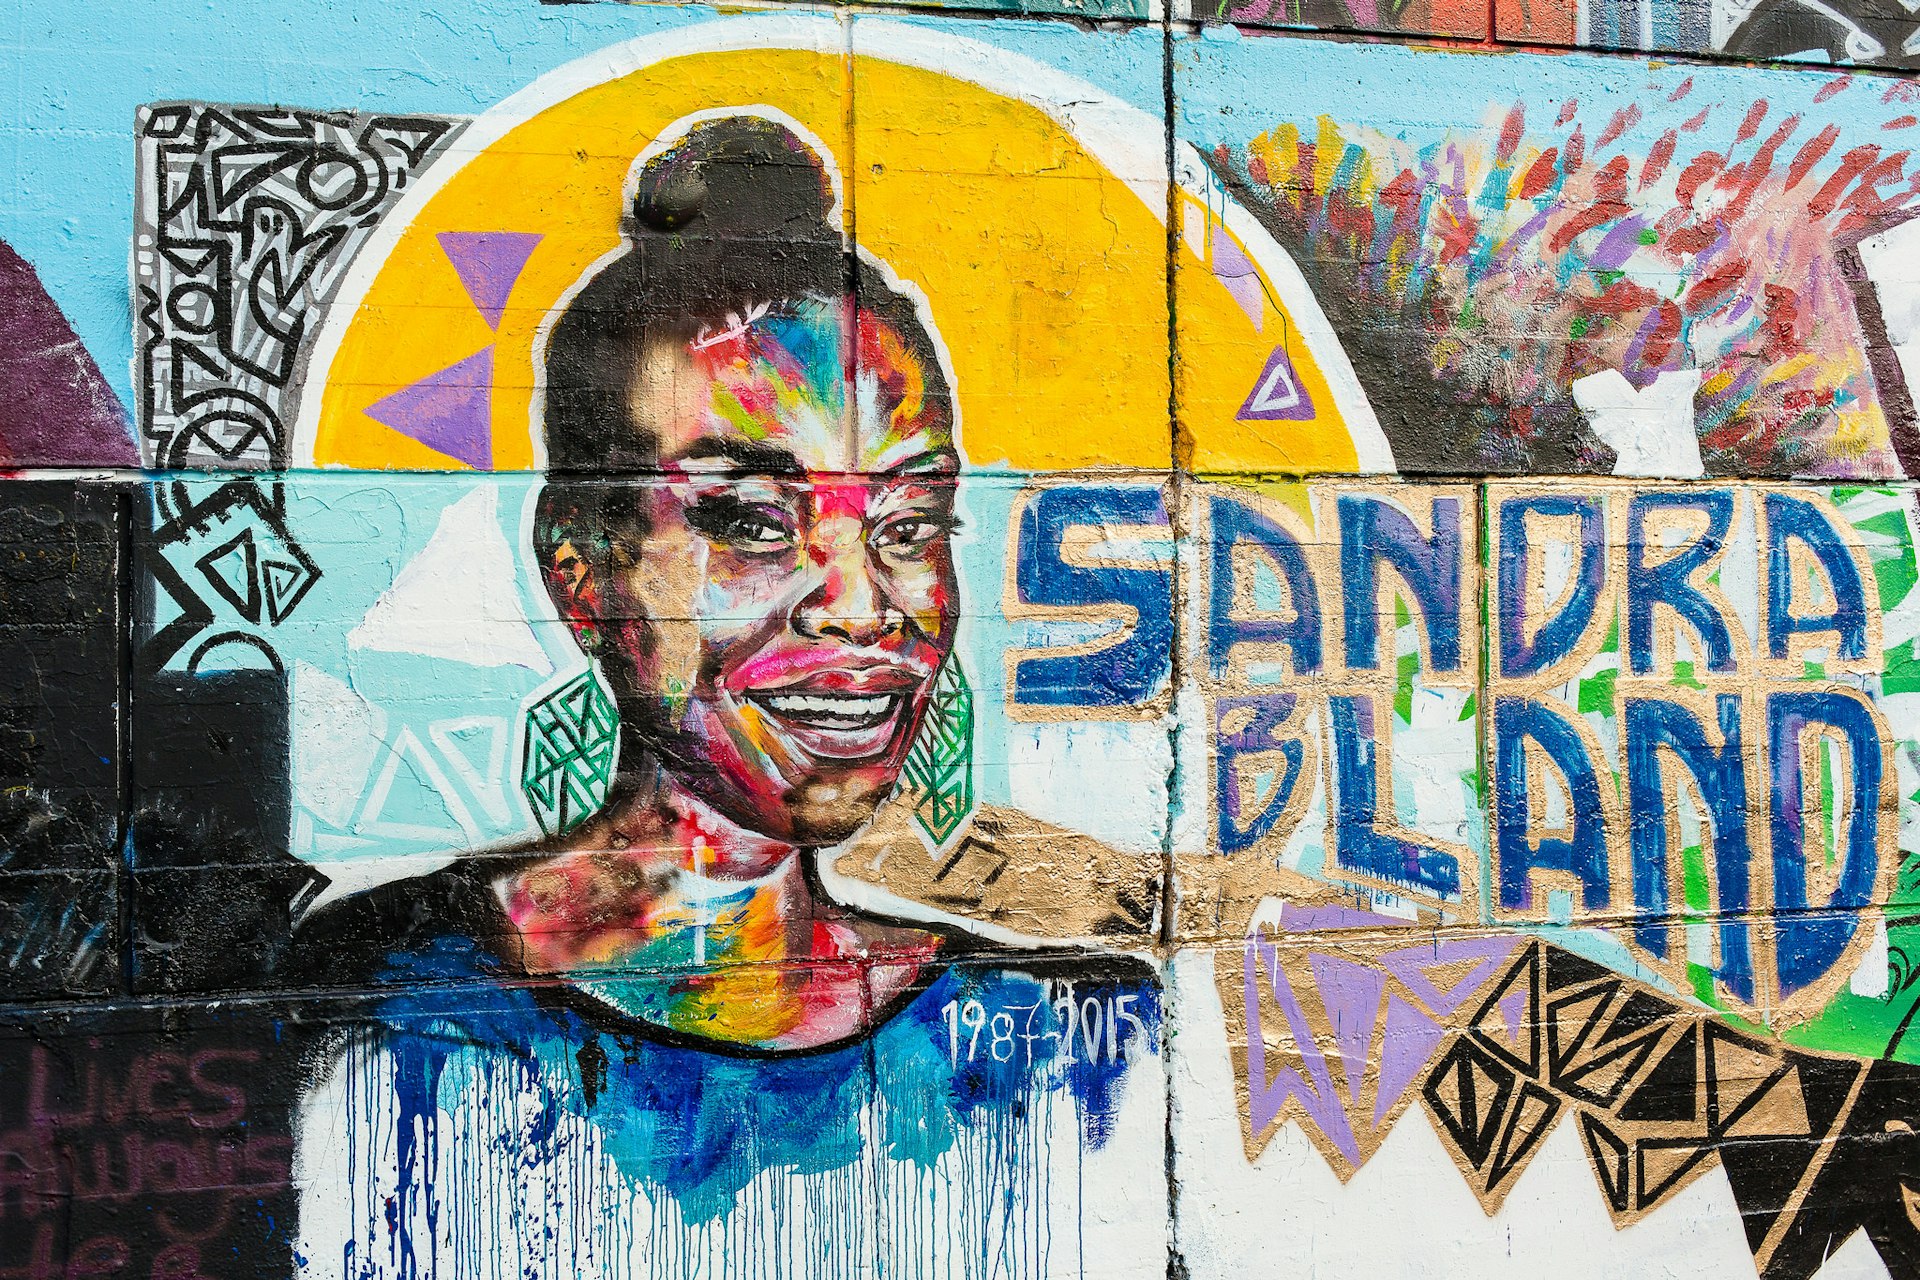 How American mental health procedures failed the late Sandra Bland